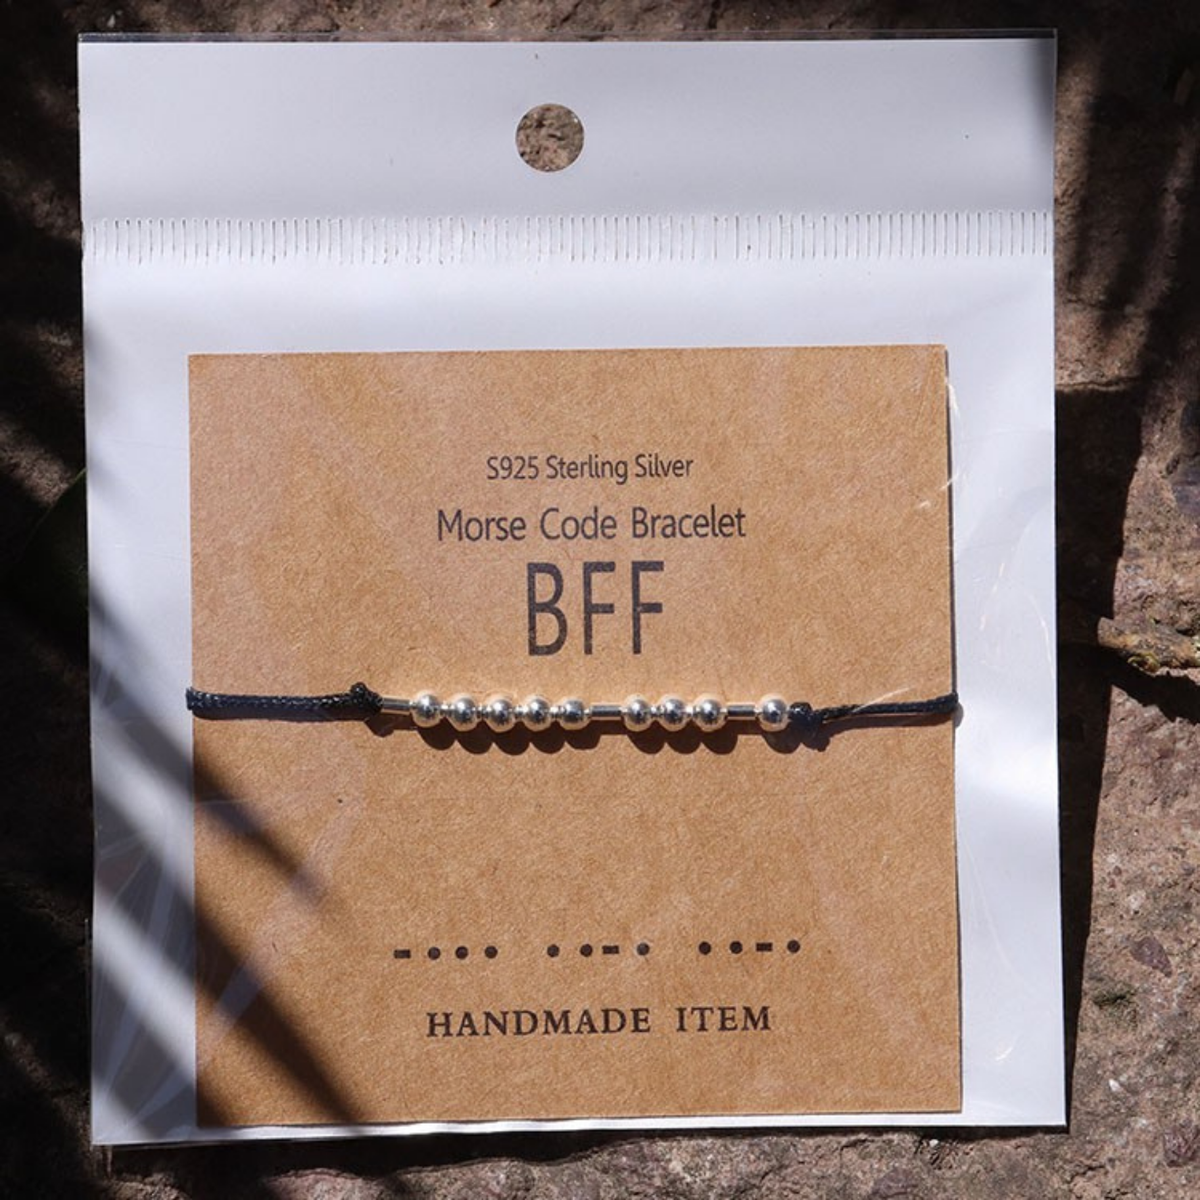 BFF-Morse Code Bracelets